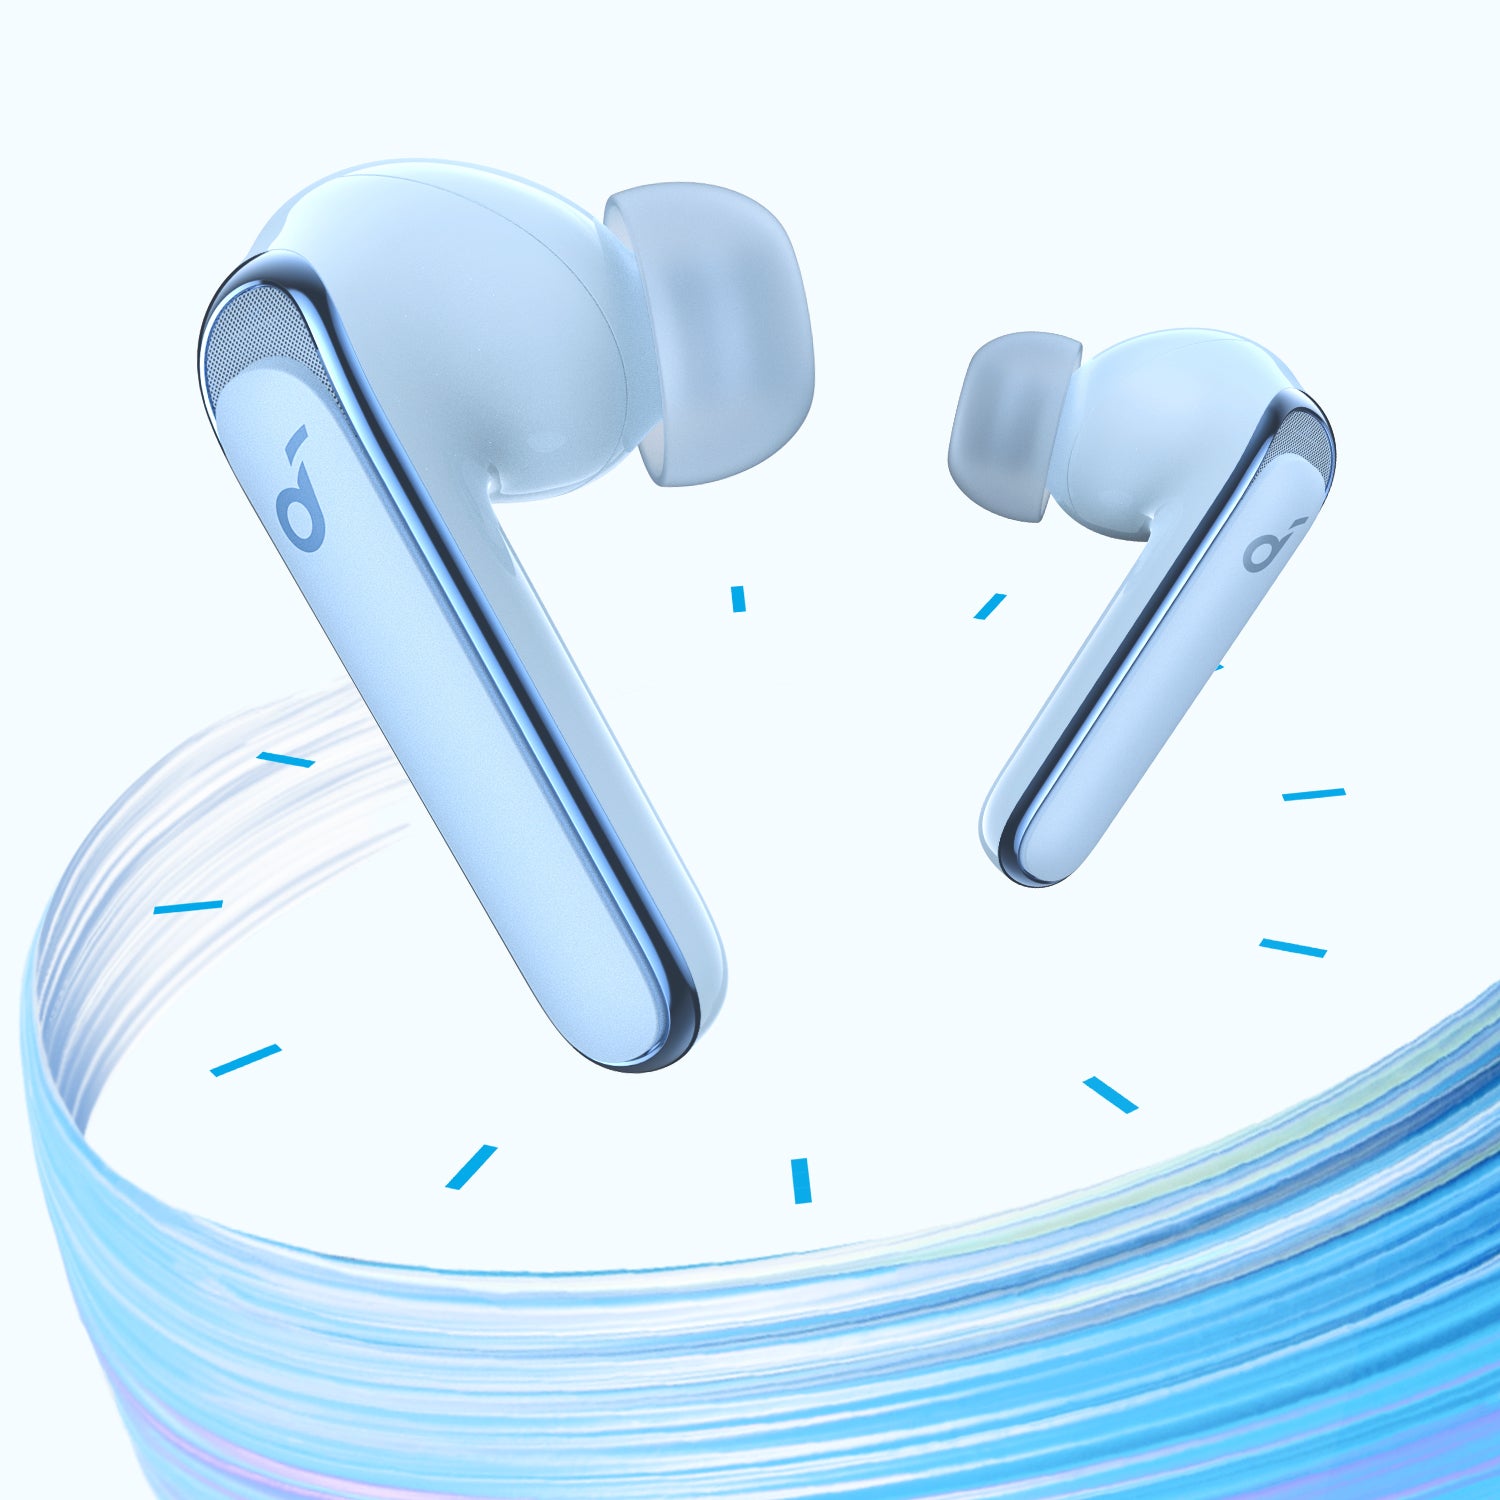 SoundcoreAudio App w/ Life P3 Earbuds 